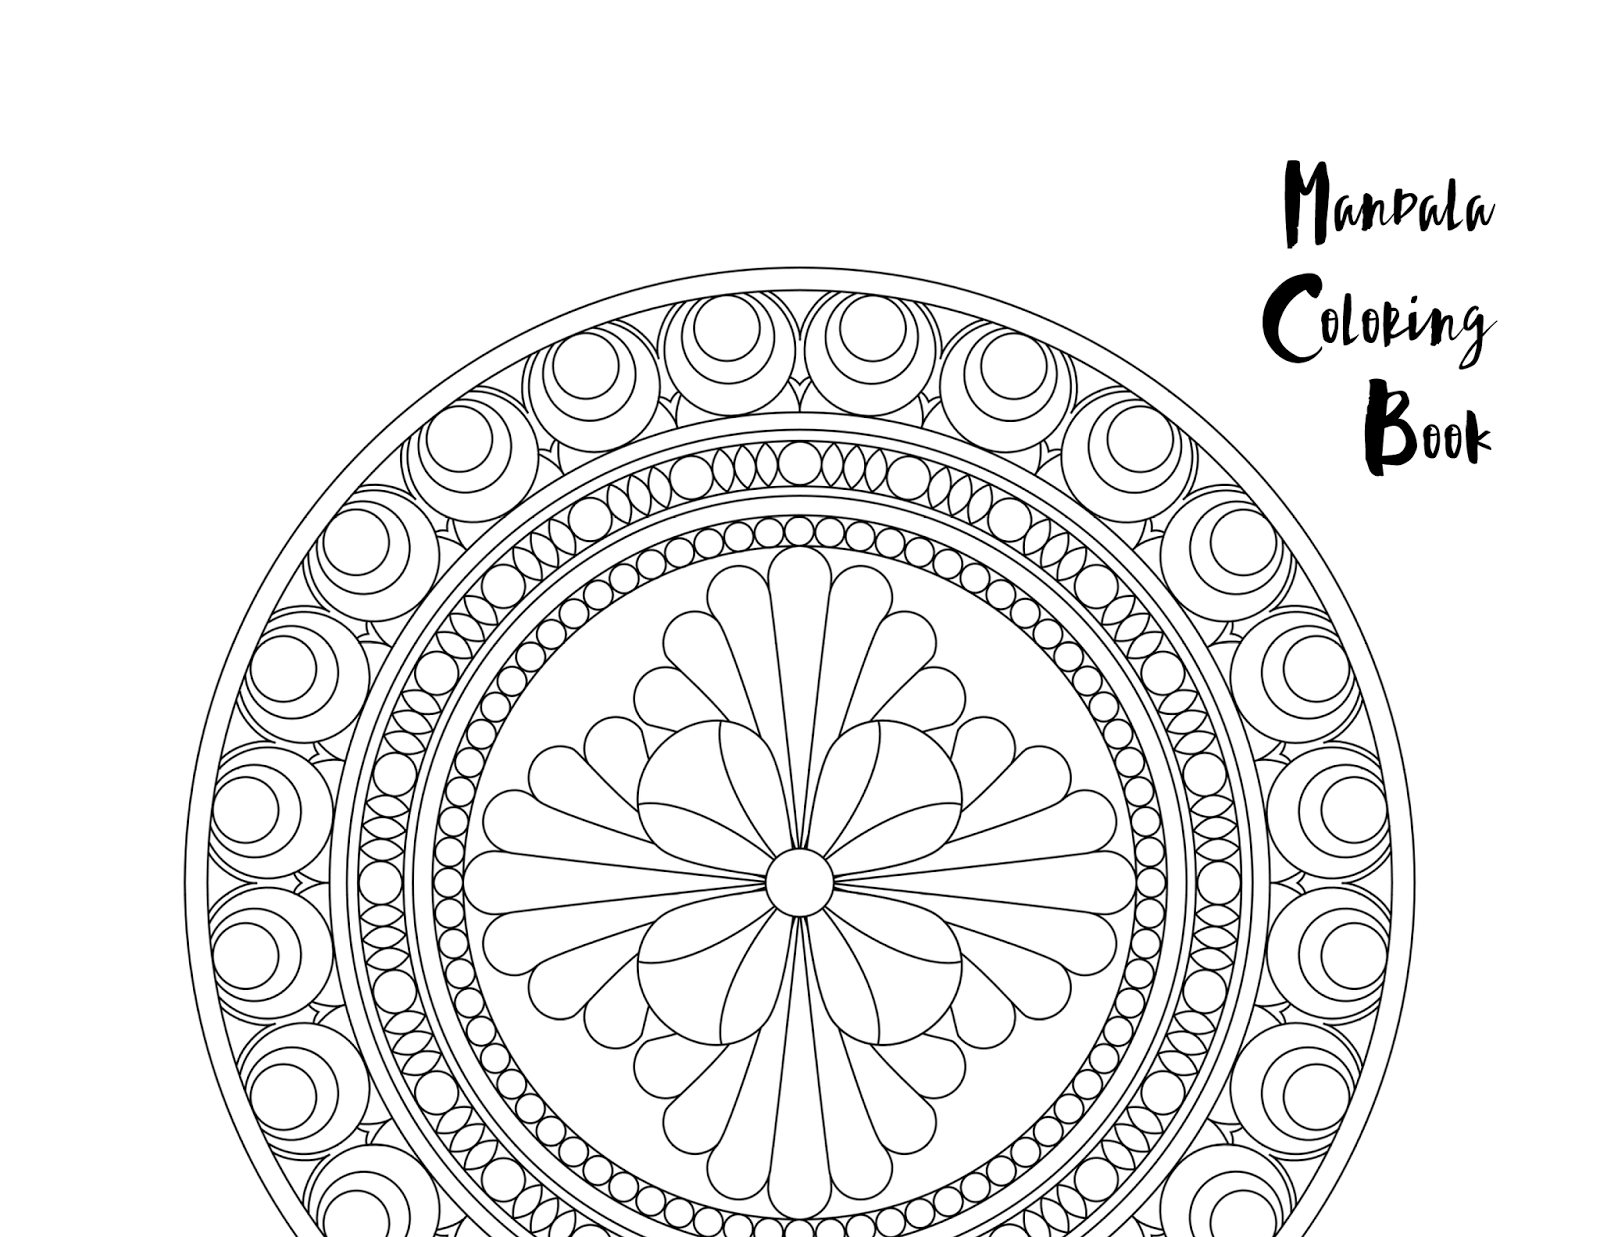 Download 101 Handmade Gift Ideas: 97. Free Printable Mandala Coloring Book